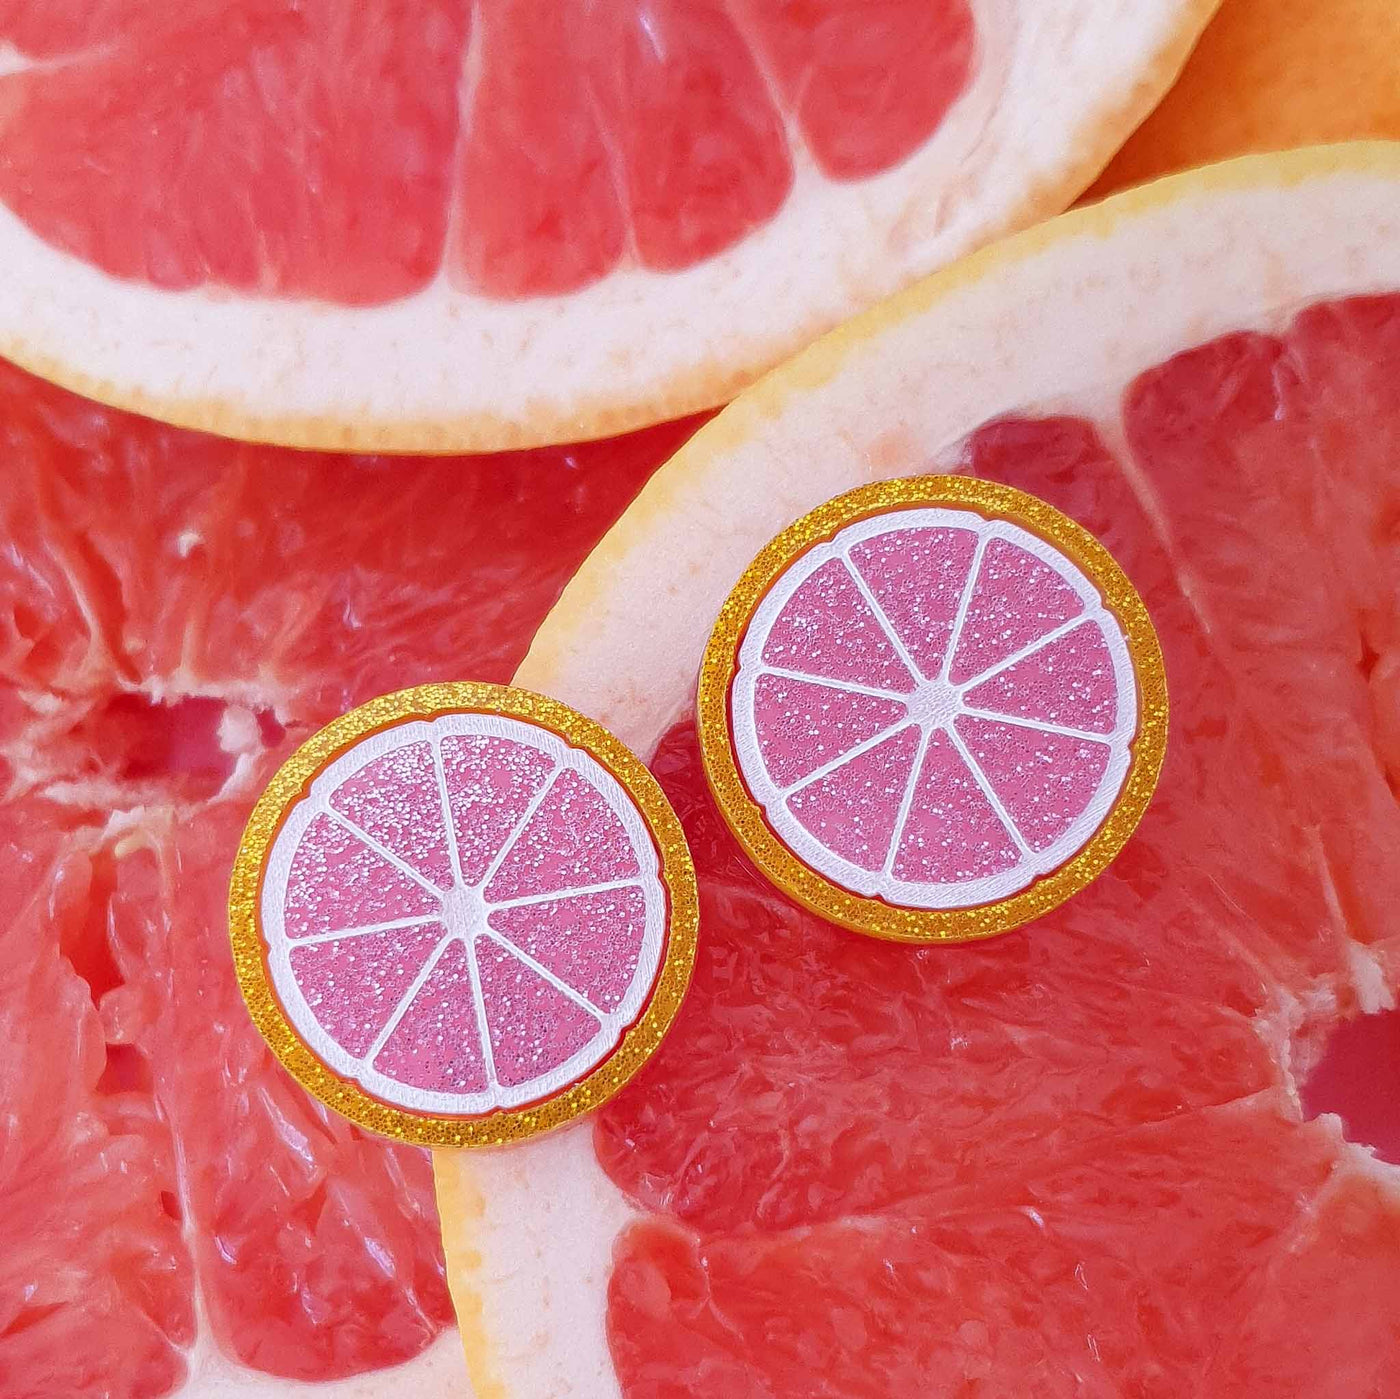 Grapefruit Earrings